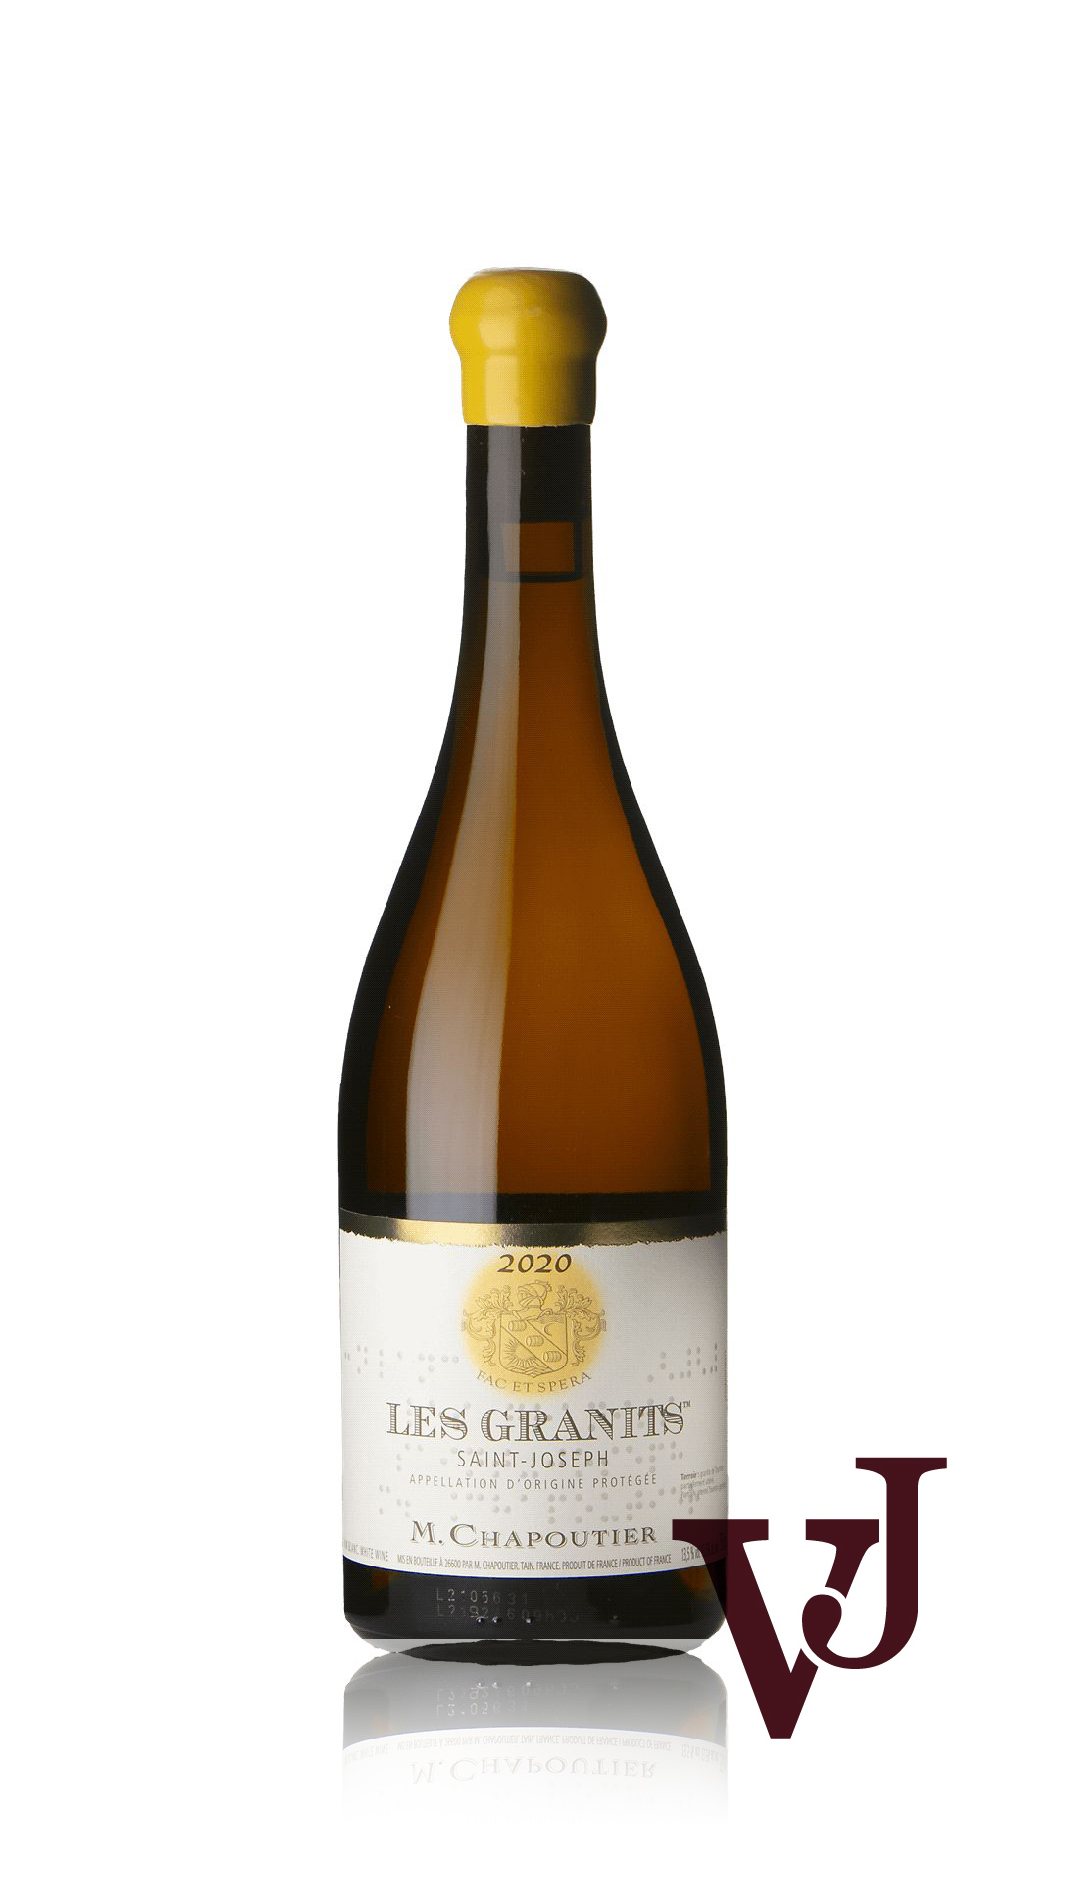 Vitt vin - Chapoutier Les Granits Blanc 2020 artikel nummer 9452101 från producenten M.Chapoutier från Frankrike